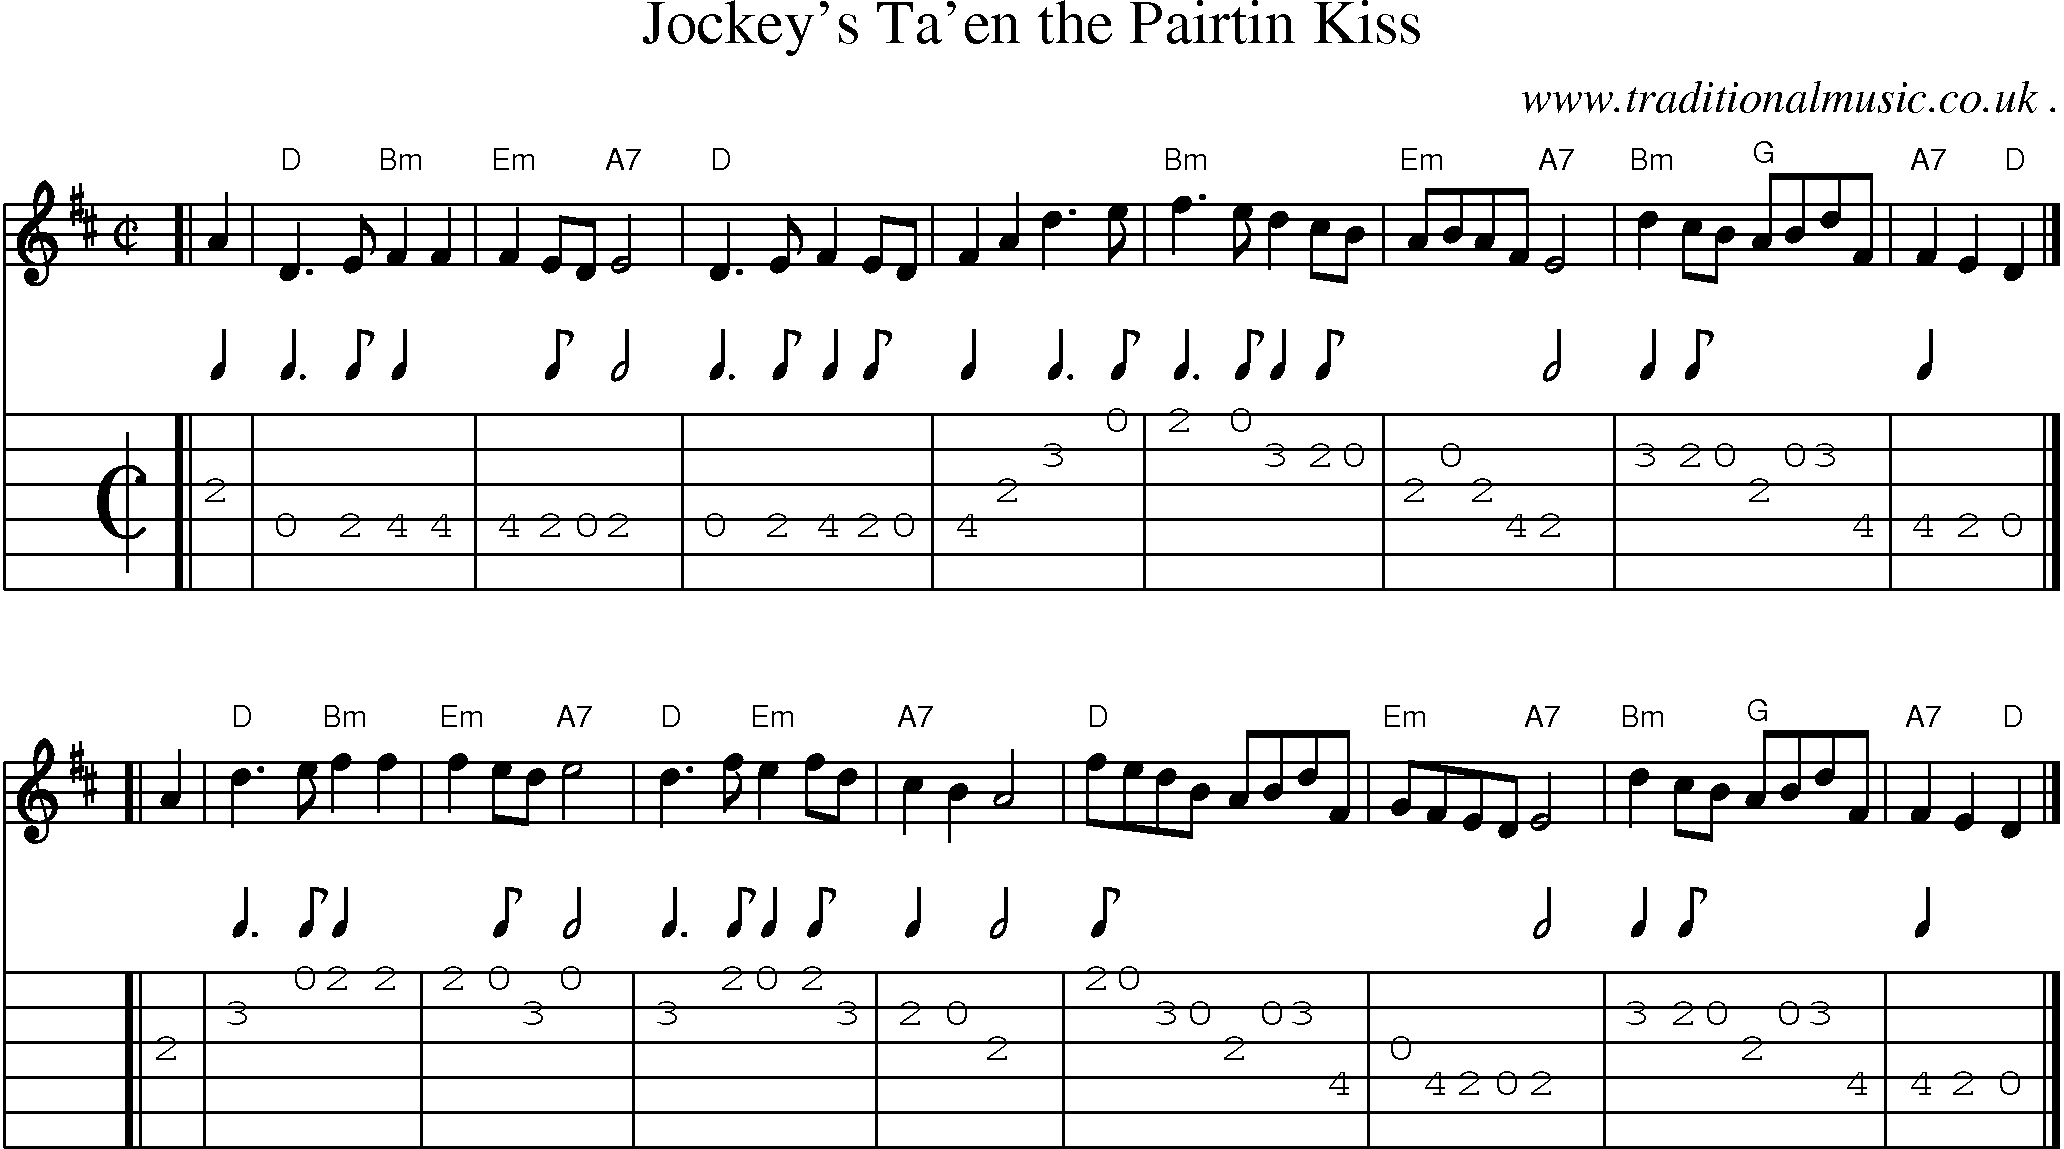 Sheet-music  score, Chords and Guitar Tabs for Jockeys Taen The Pairtin Kiss